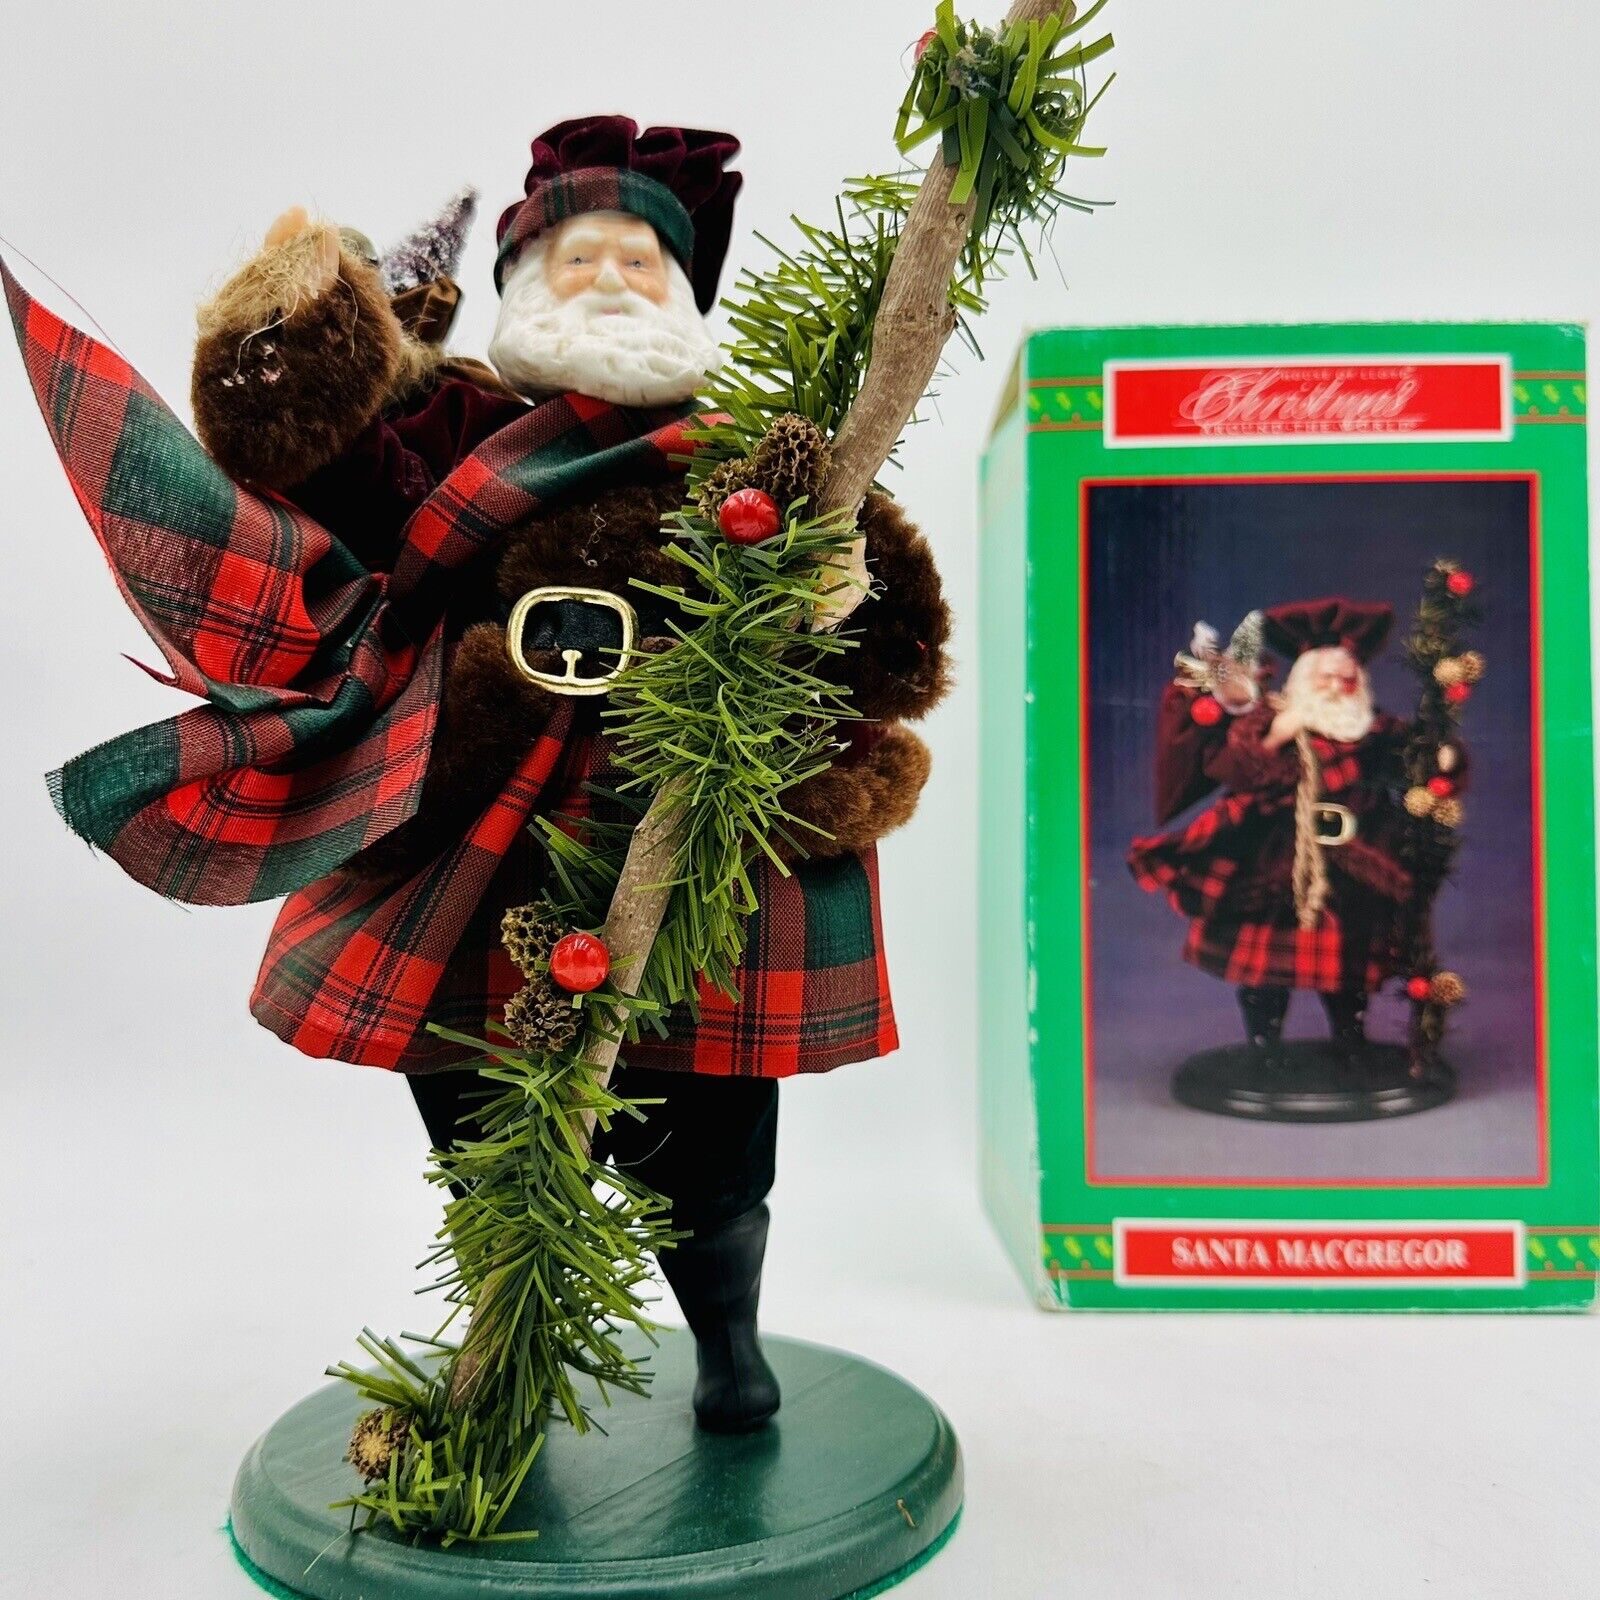 House of Lloyd Christmas Around the World Santa MacGregor Figure